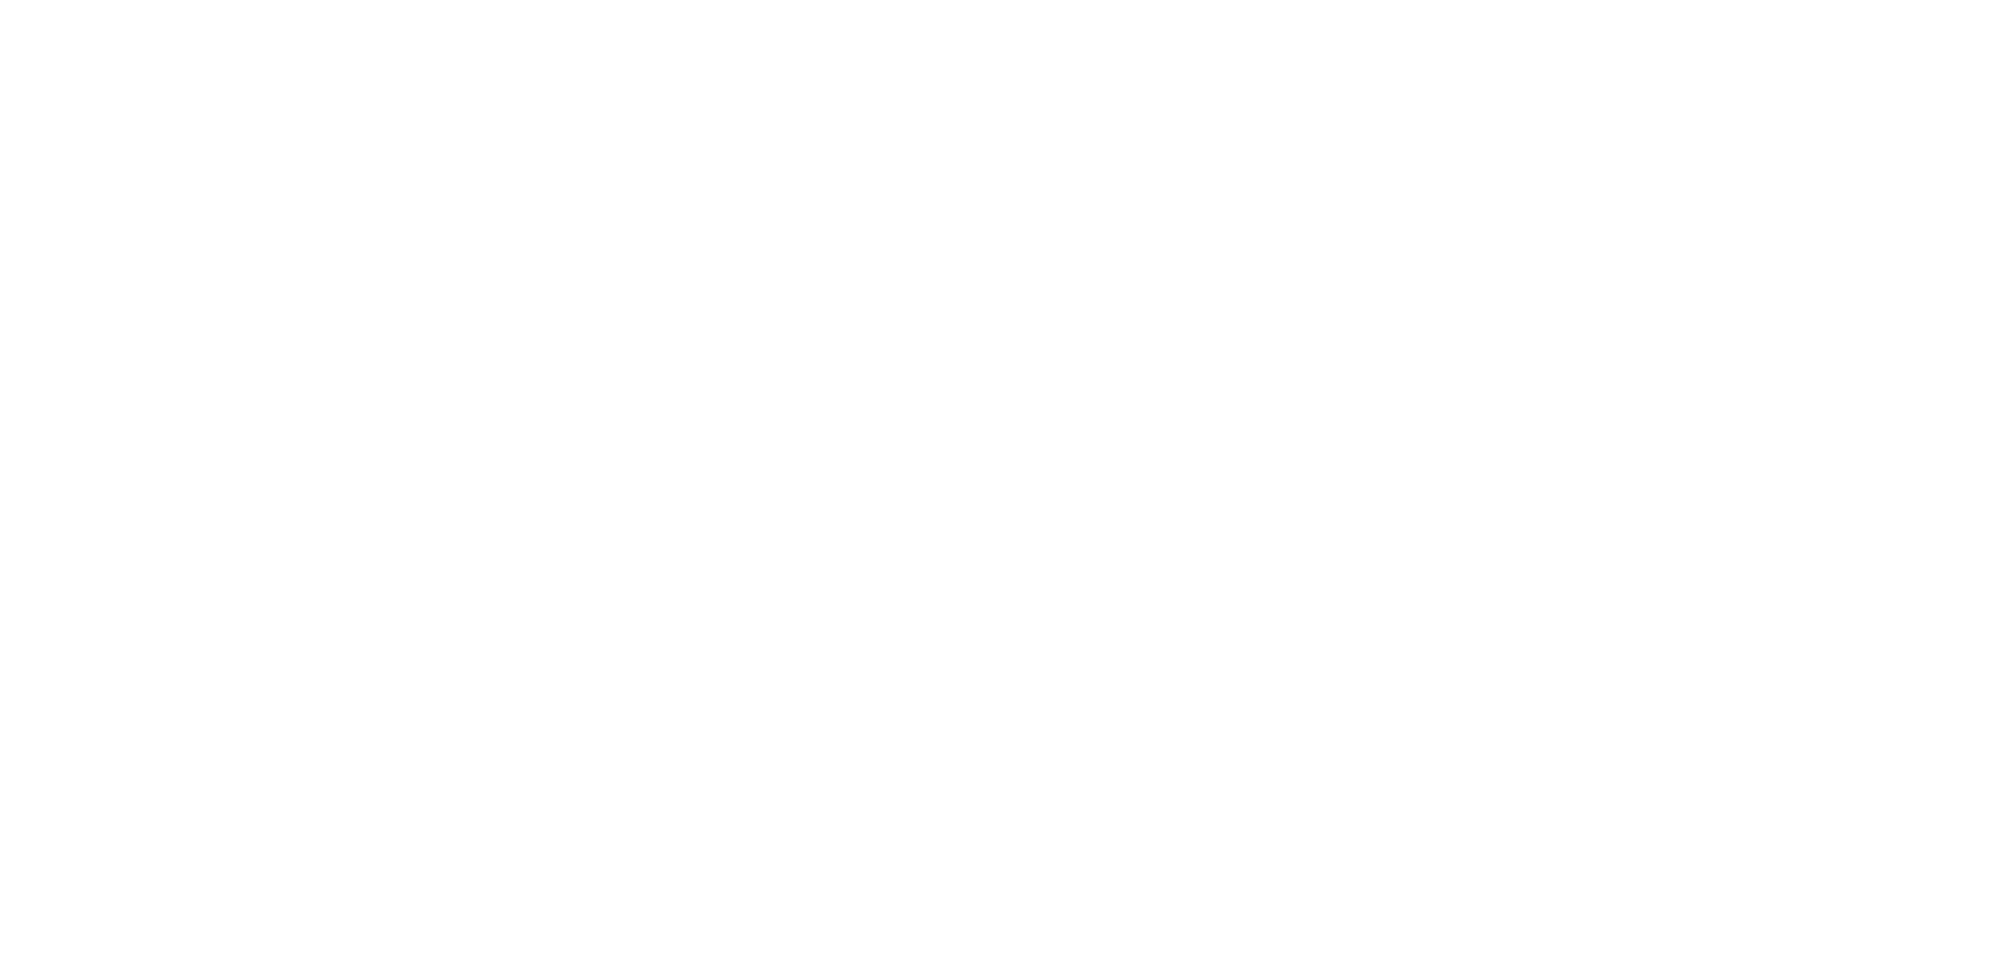 Tanner Richard Craft